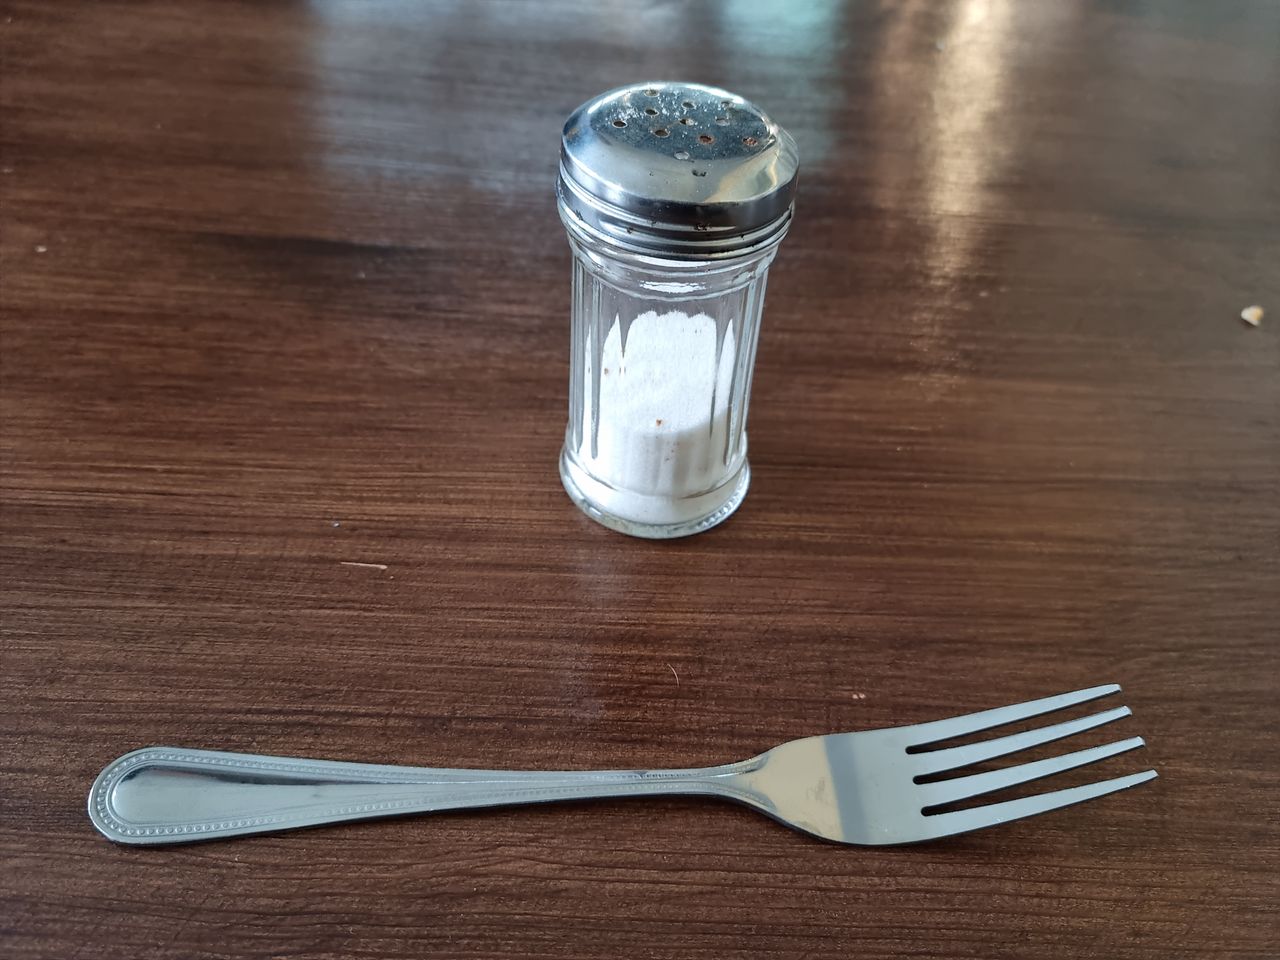 Sól w solniczce na stole, obok widelca